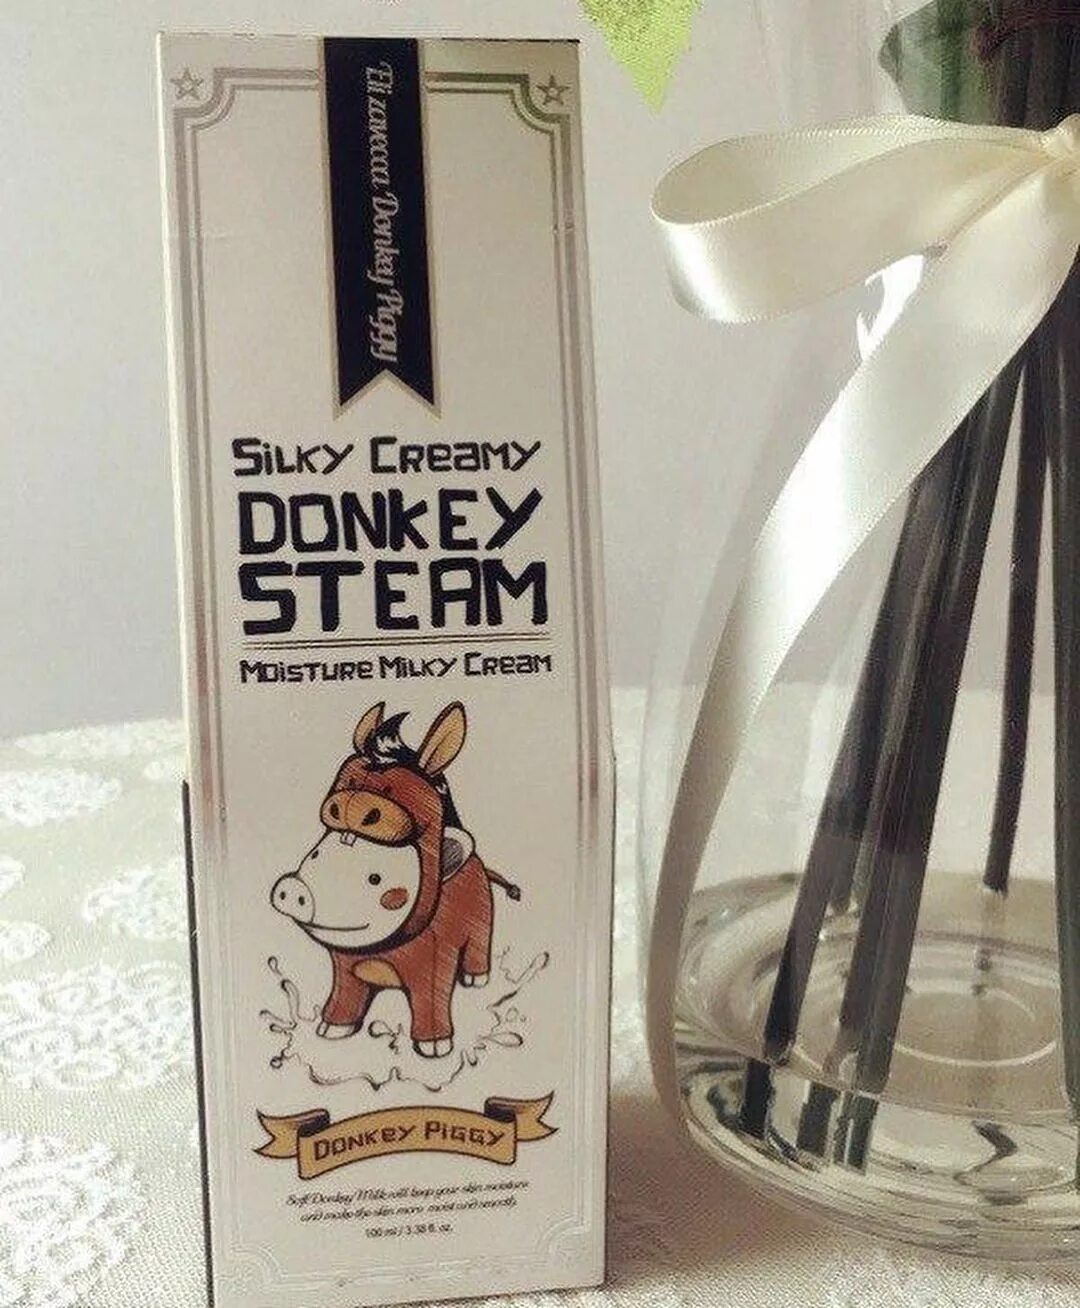 Silky creamy donkey steam moisture milky cream крем фото 41